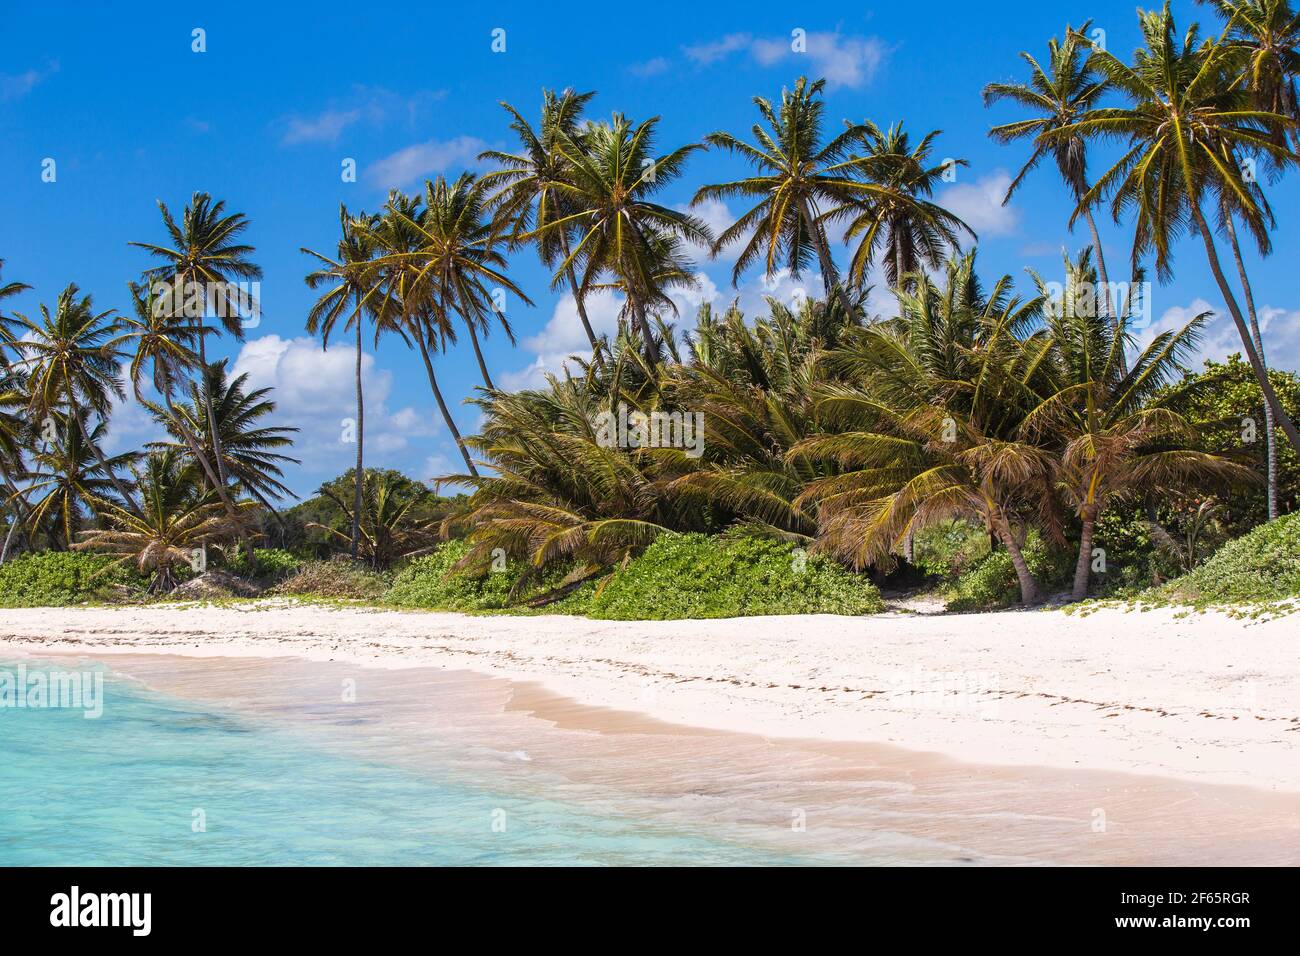 Dominican Republic, Punta Cana, Playa Blanca Stock Photo